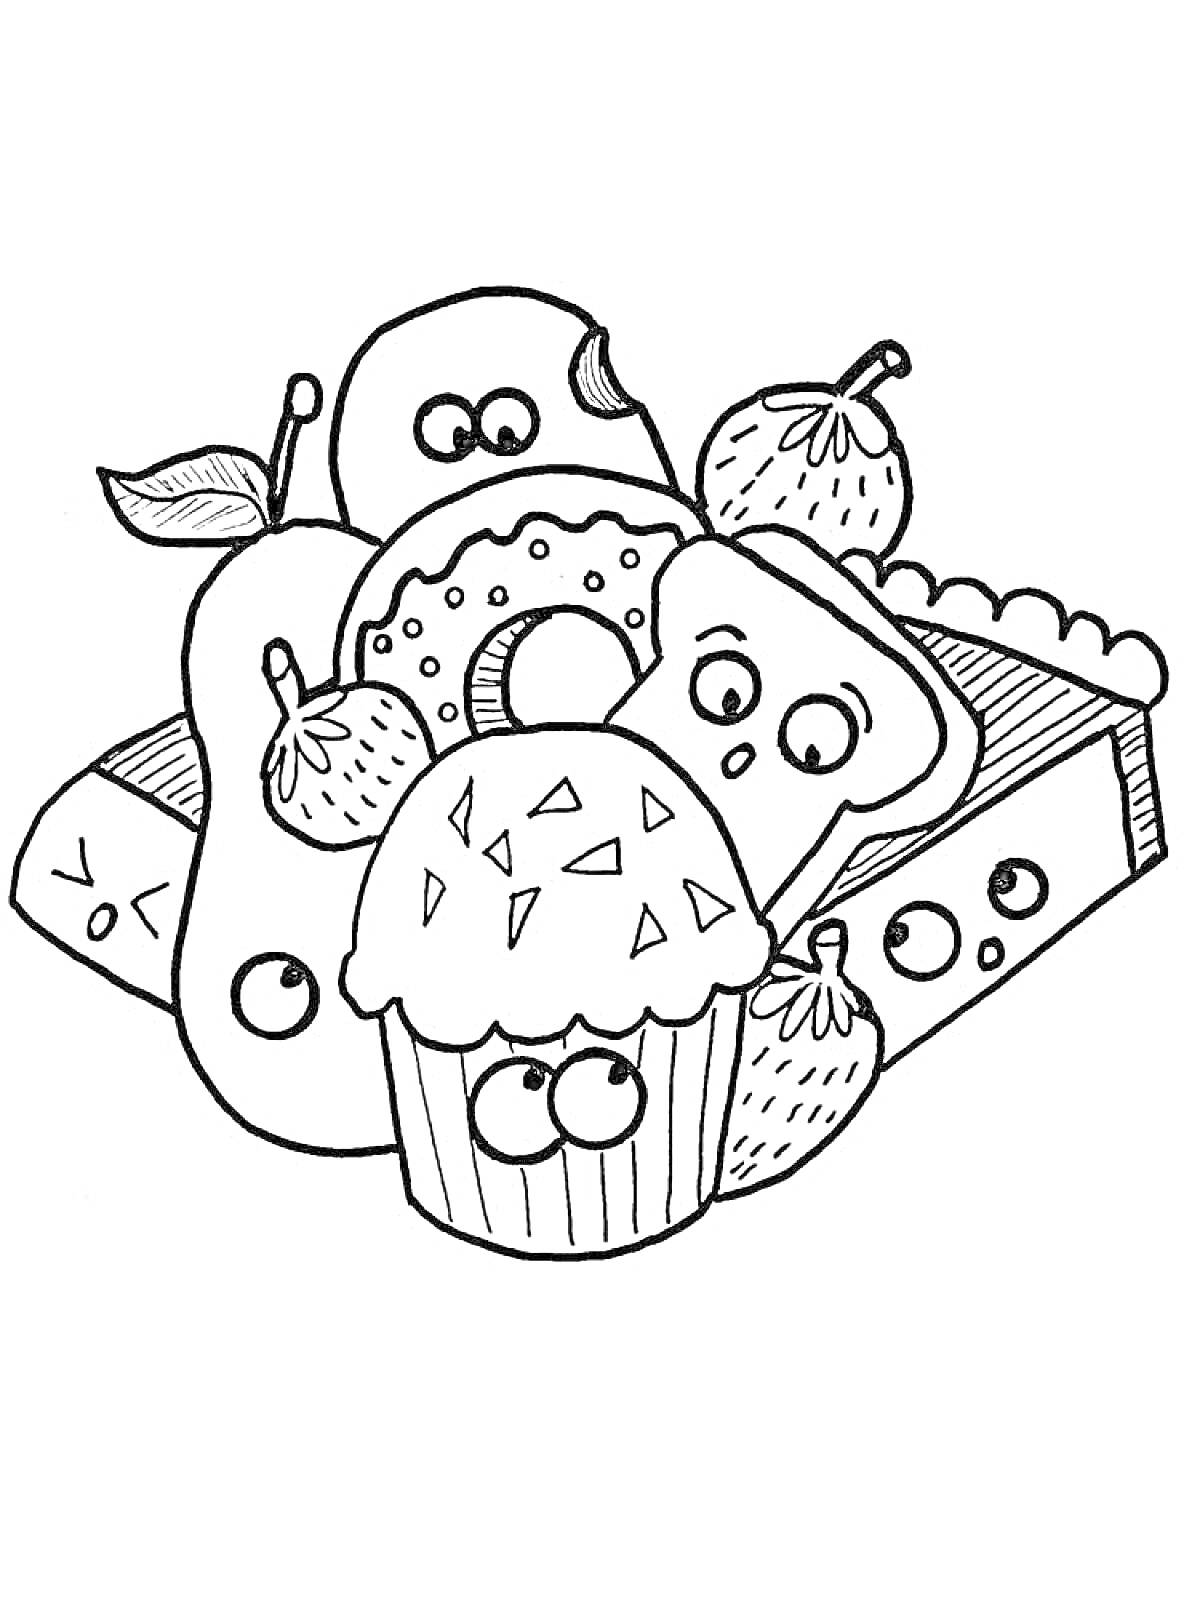 Раскраска Пирог, кекс, пончик, тост, грушa и клубника с лицами